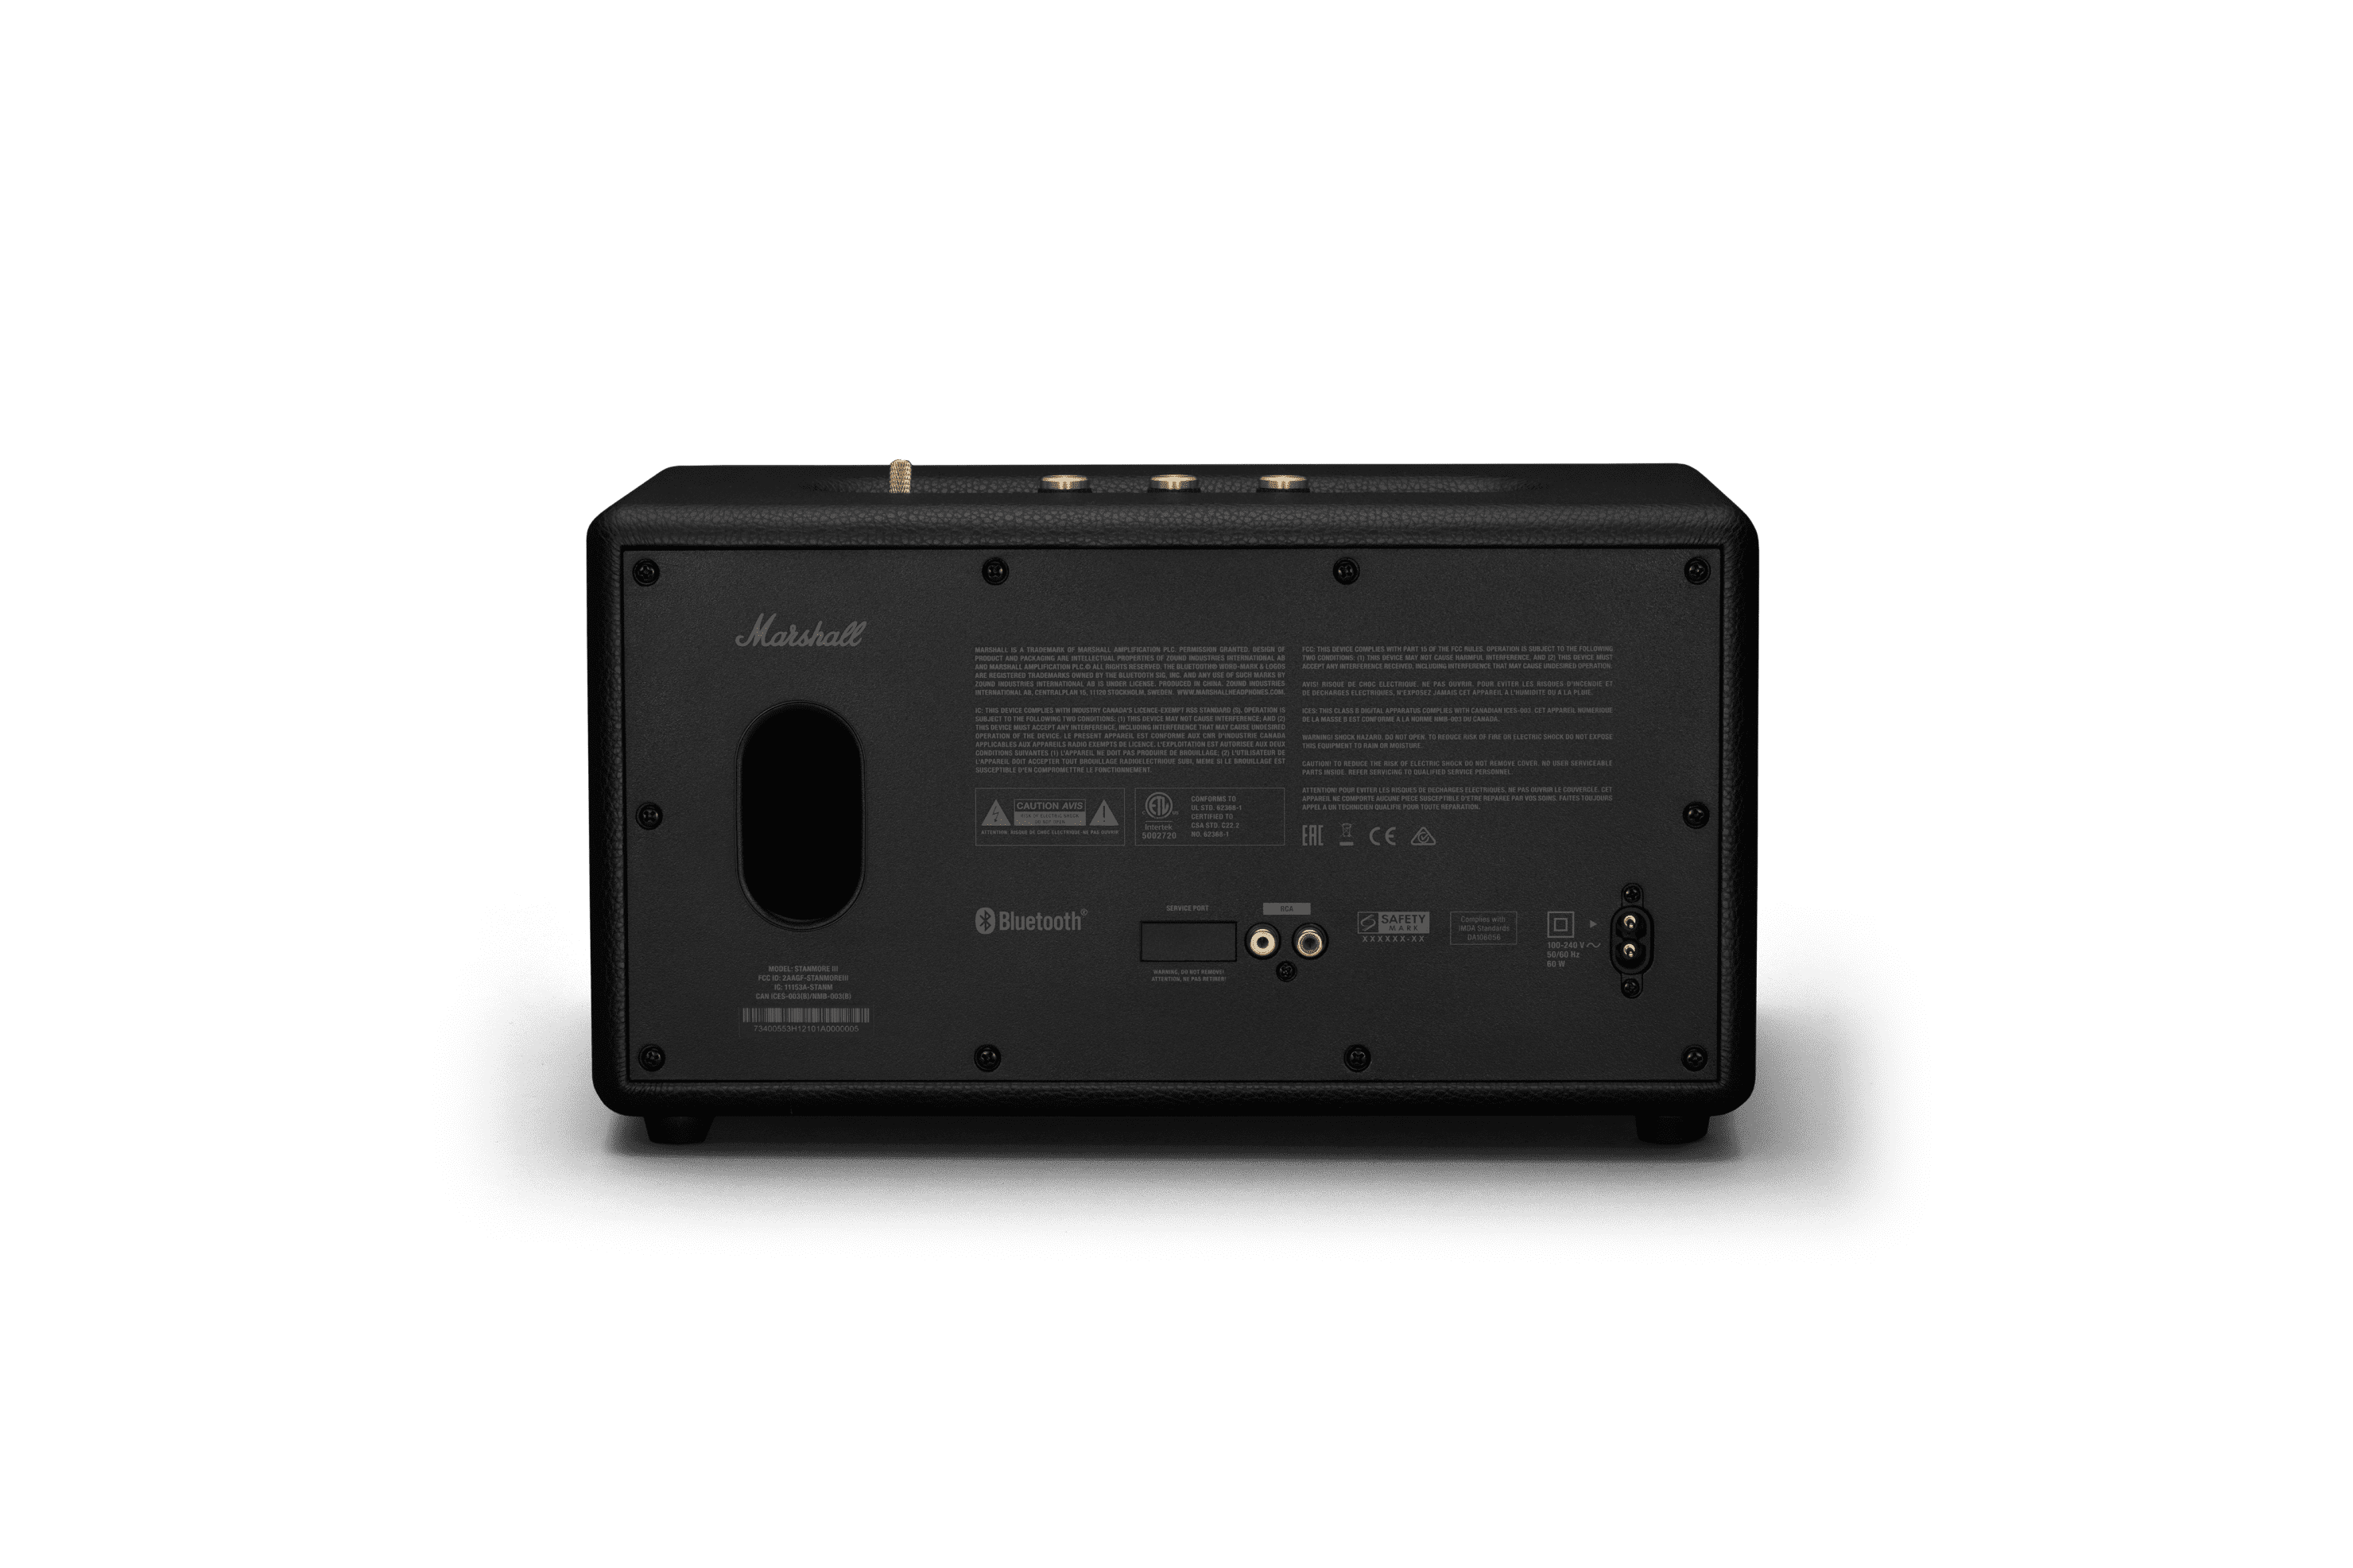 Enceinte Bluetooth Marshall Stanmore III - Noir